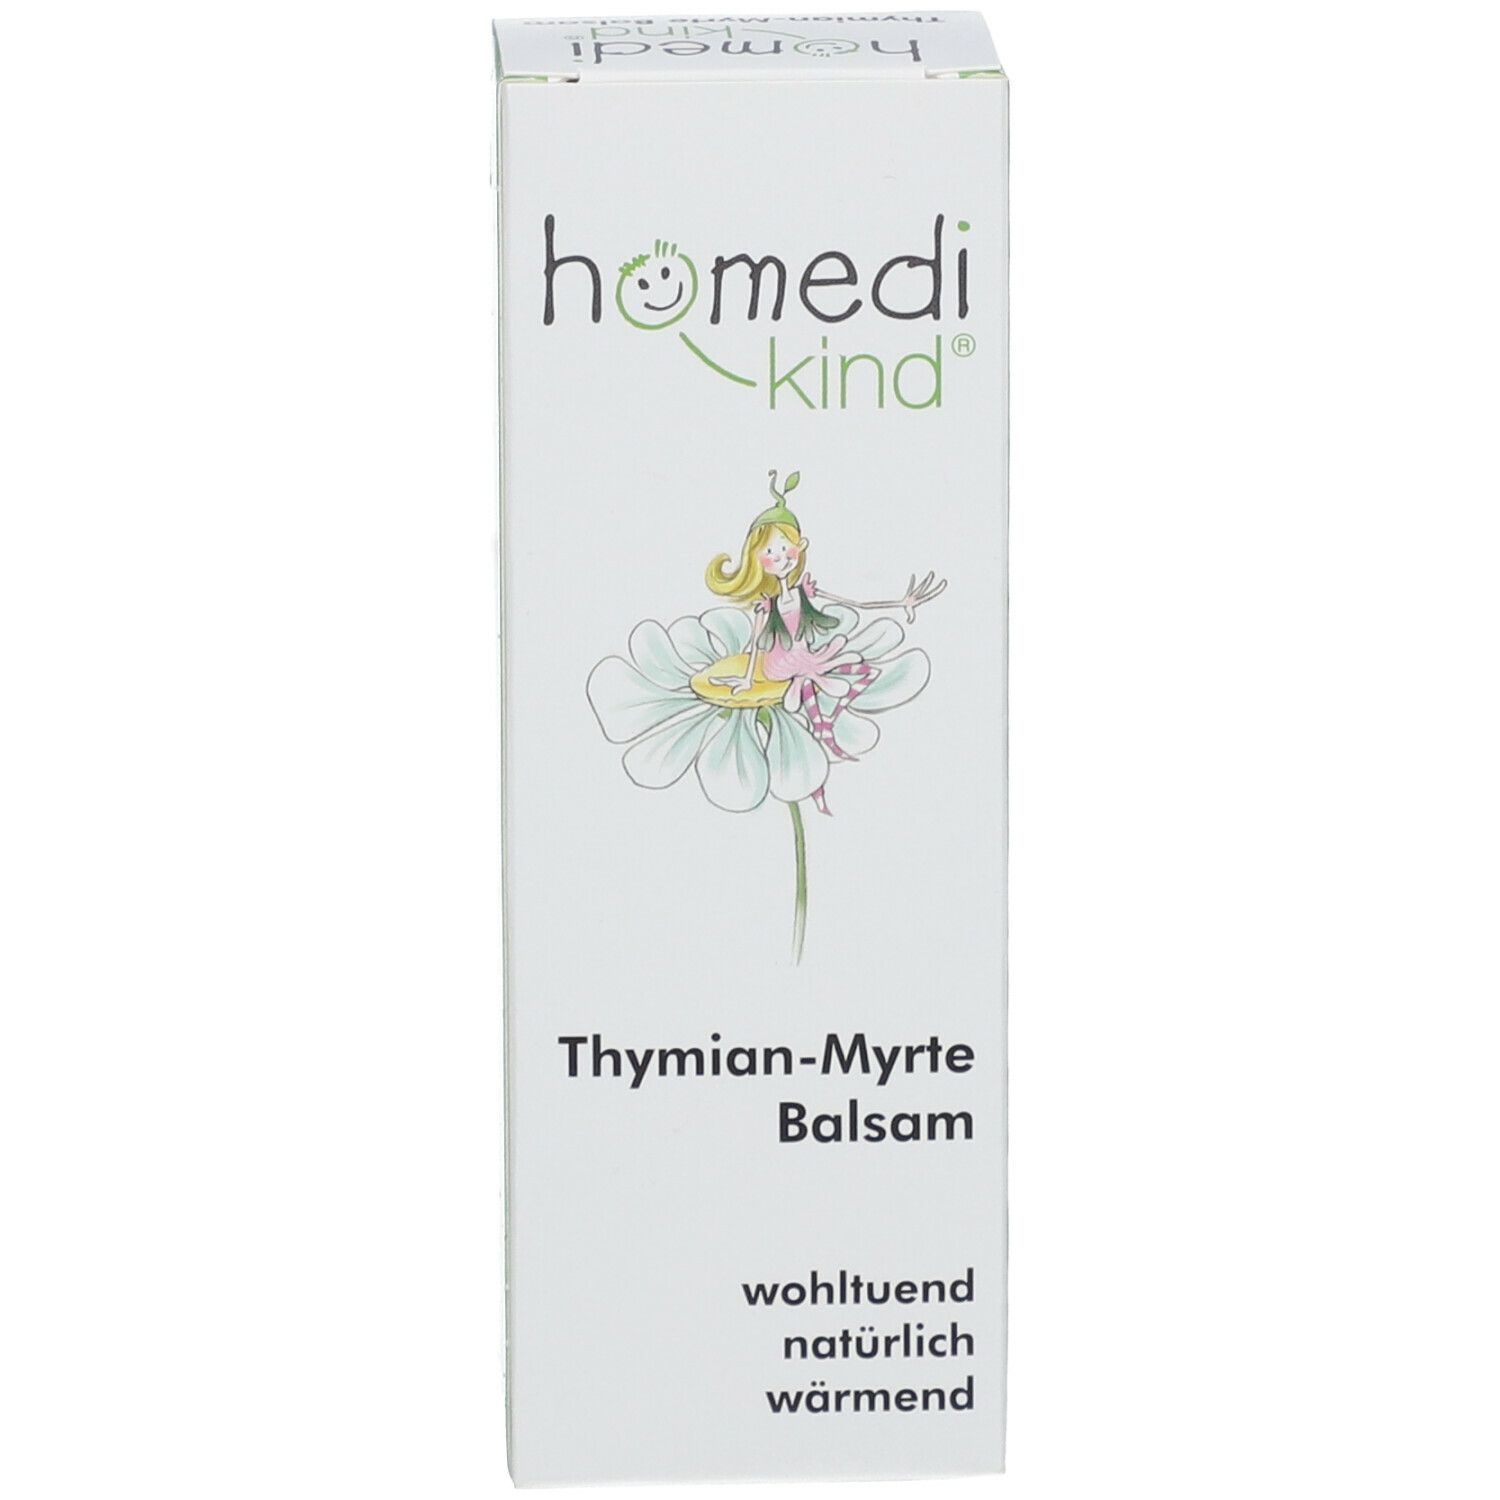 homedi-kind® Thymian-Myrte Balsam